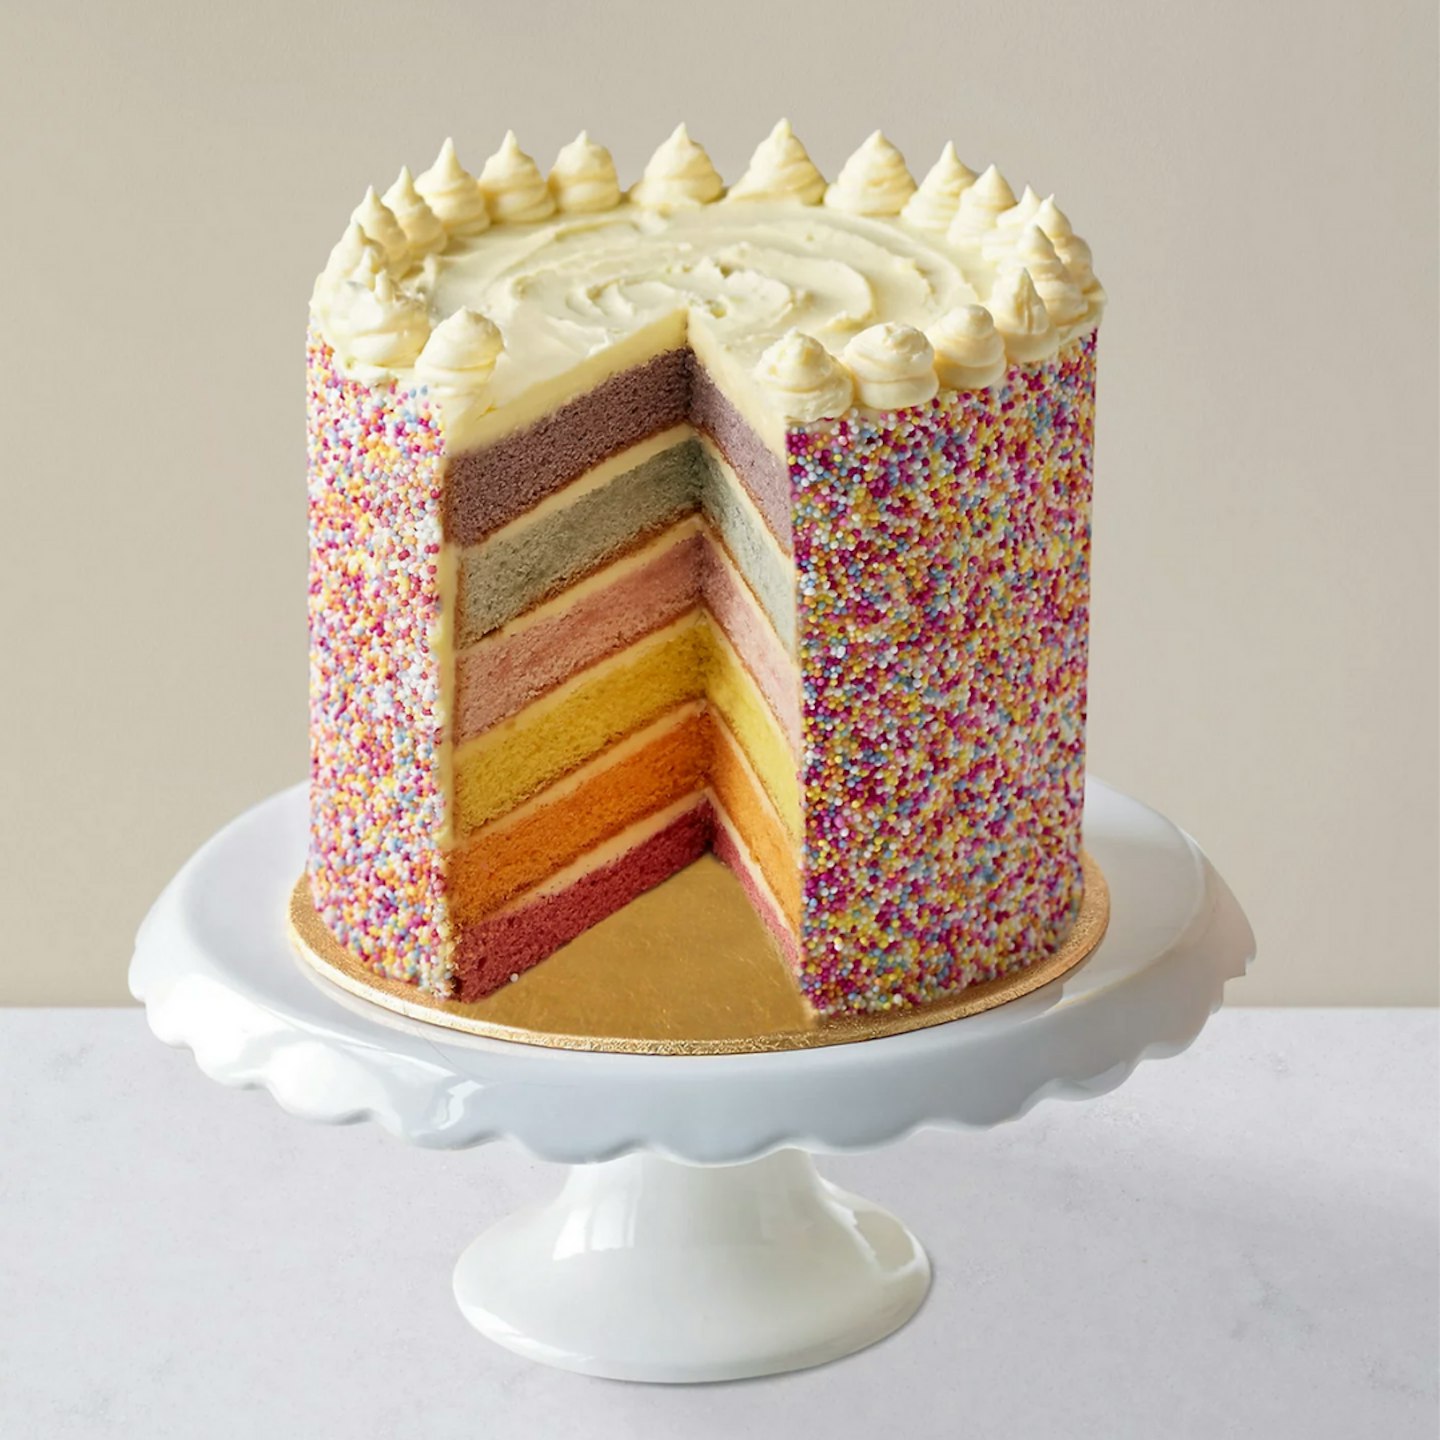 The best supermarket birthday cakes: Rainbow Layers Cake